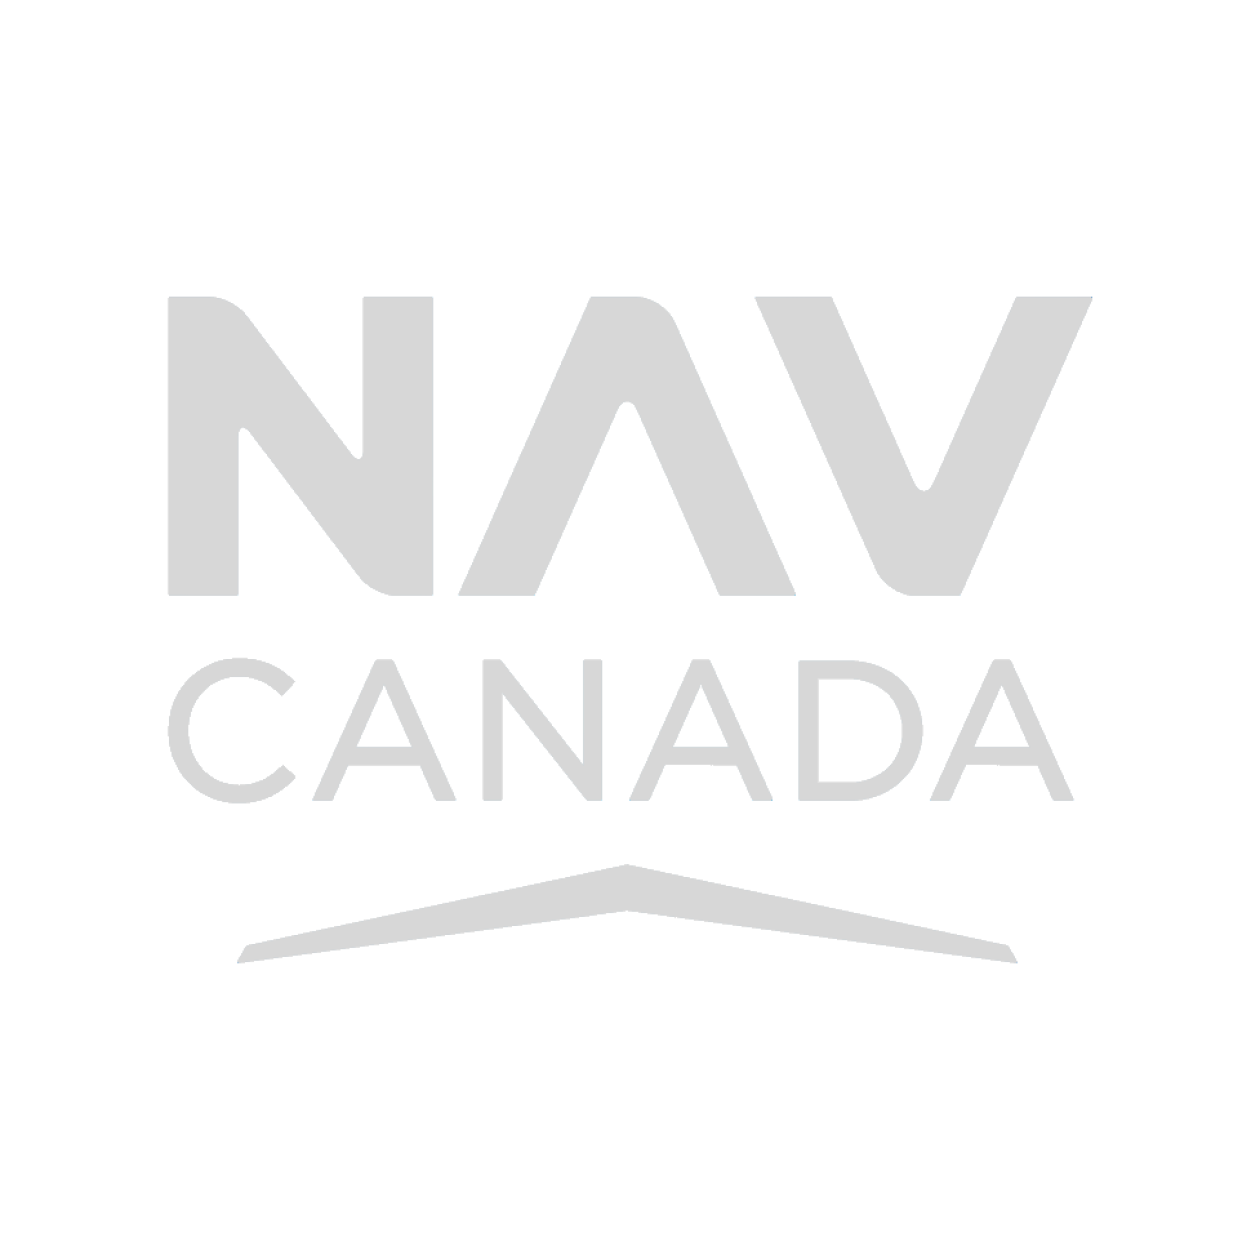 Image NAV Canada gris_web